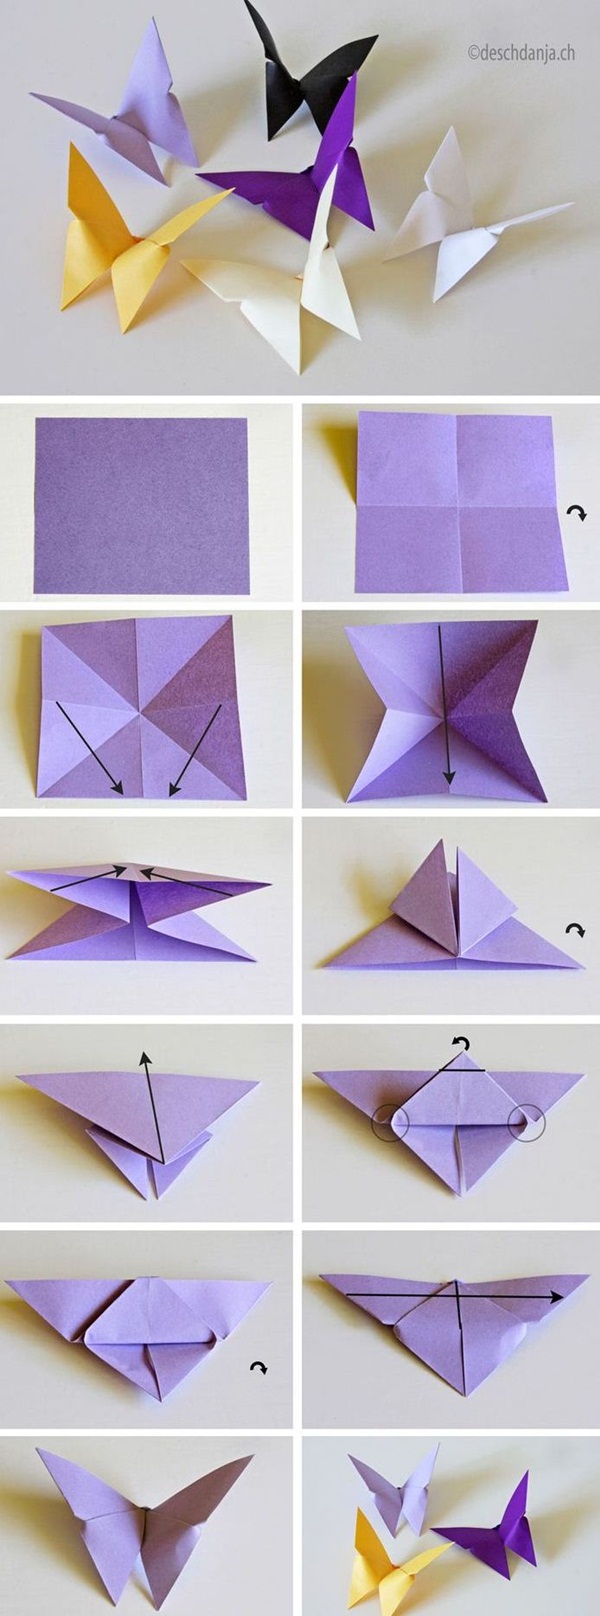 DIY Paper Crafts Ideas for Kids24